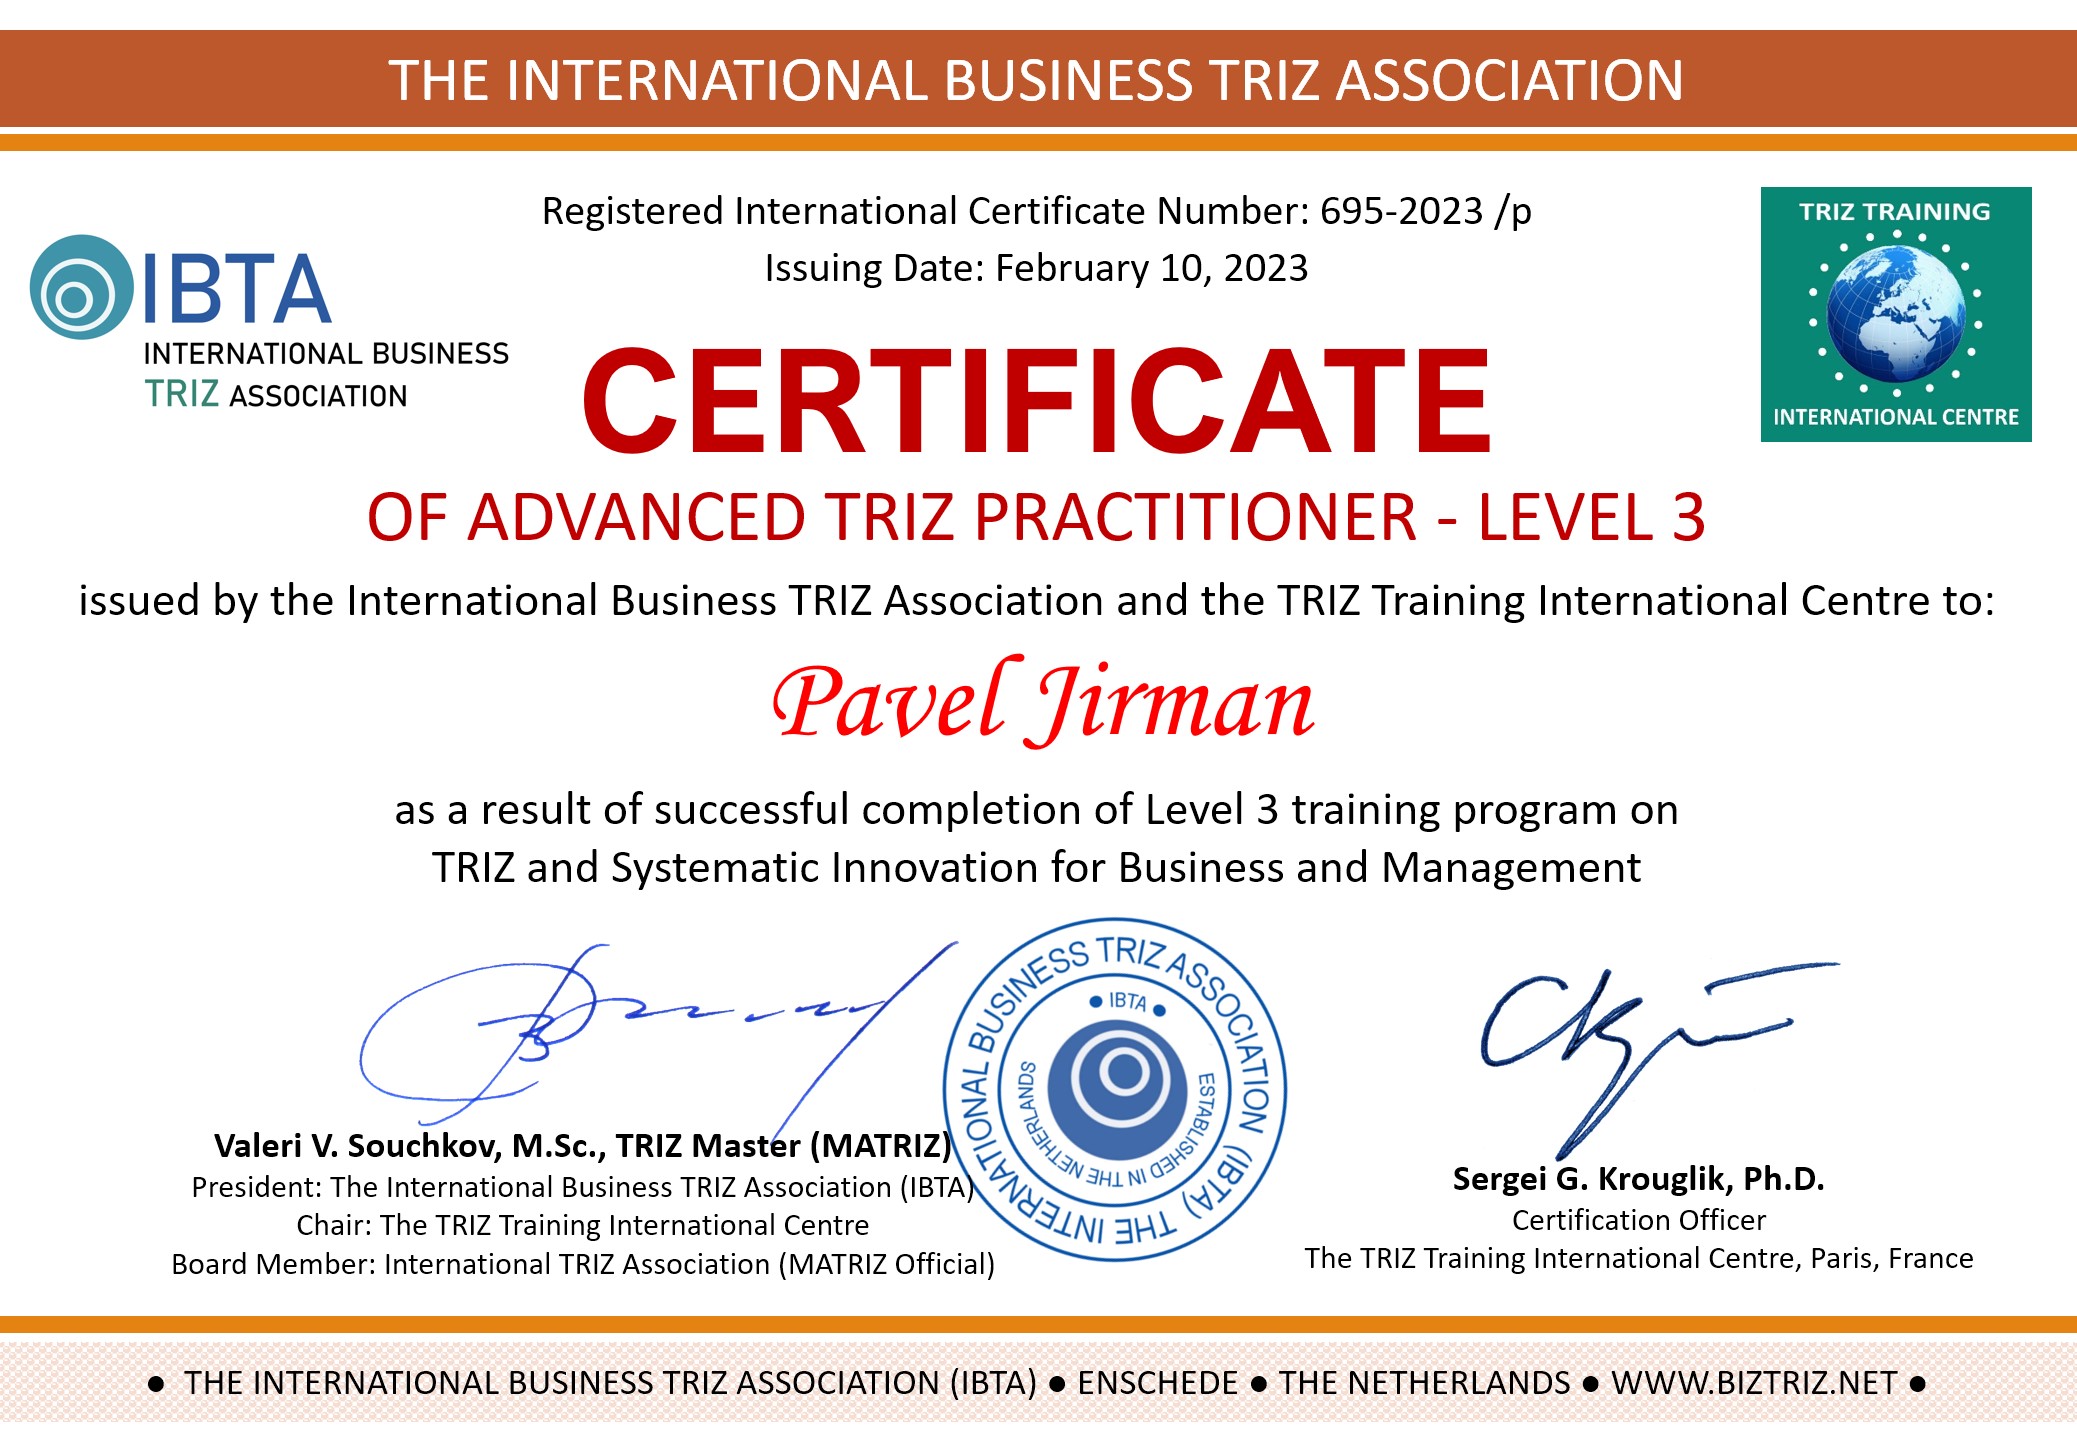 PowerPoint Slide Show IBTA Certificate 695 EN Pavel Jirman Level 3.pptx 11 06 2023 12 16 15